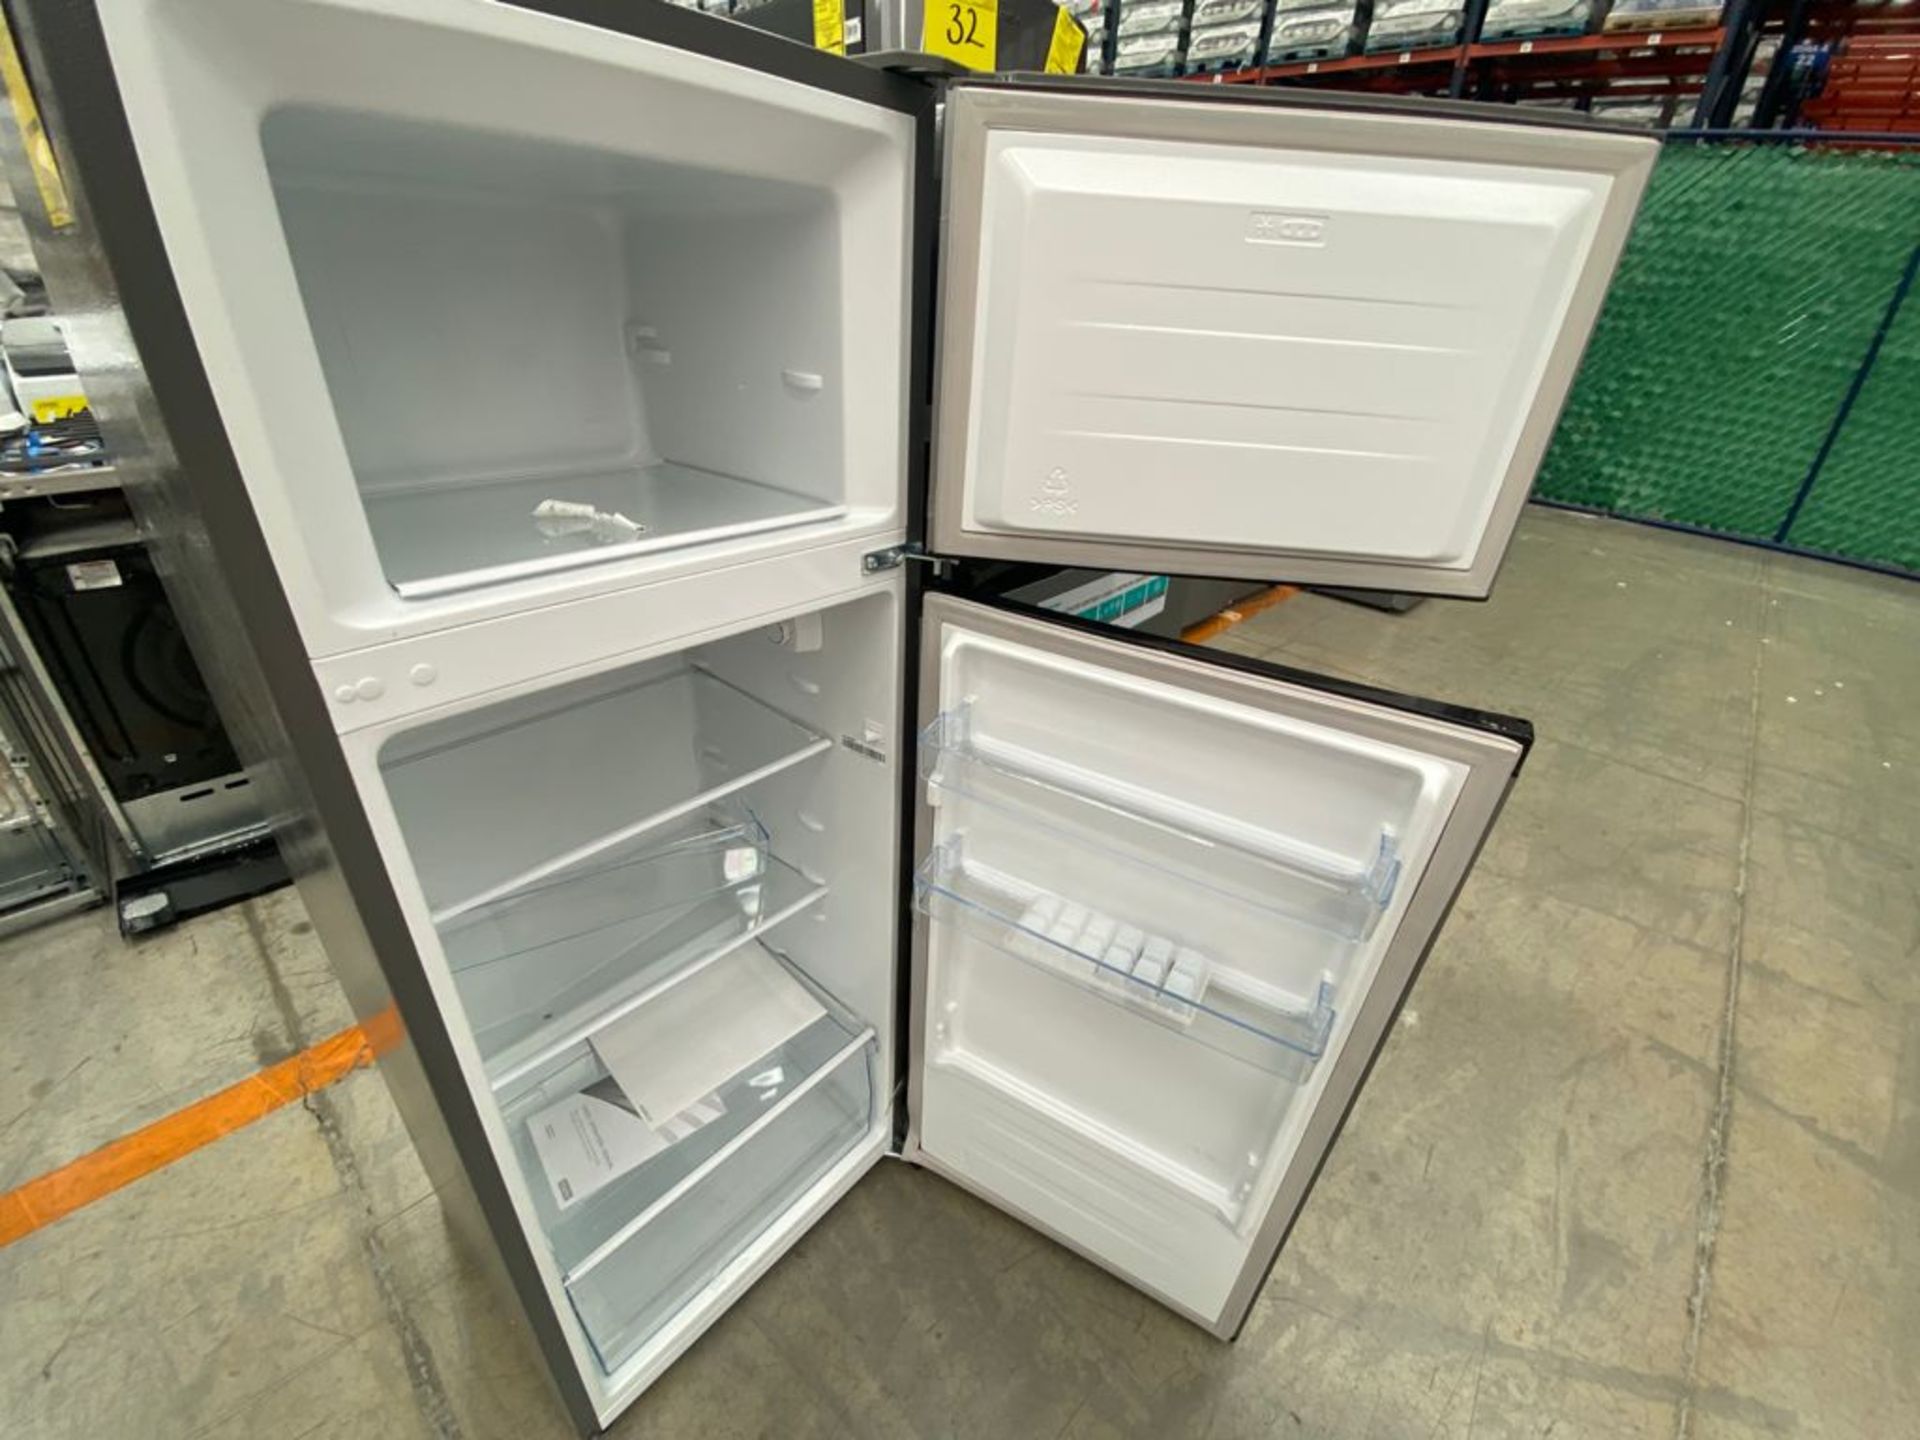 2 Refrigeradores marca Hisense color gris modelo RT80D6AWX - Image 18 of 28